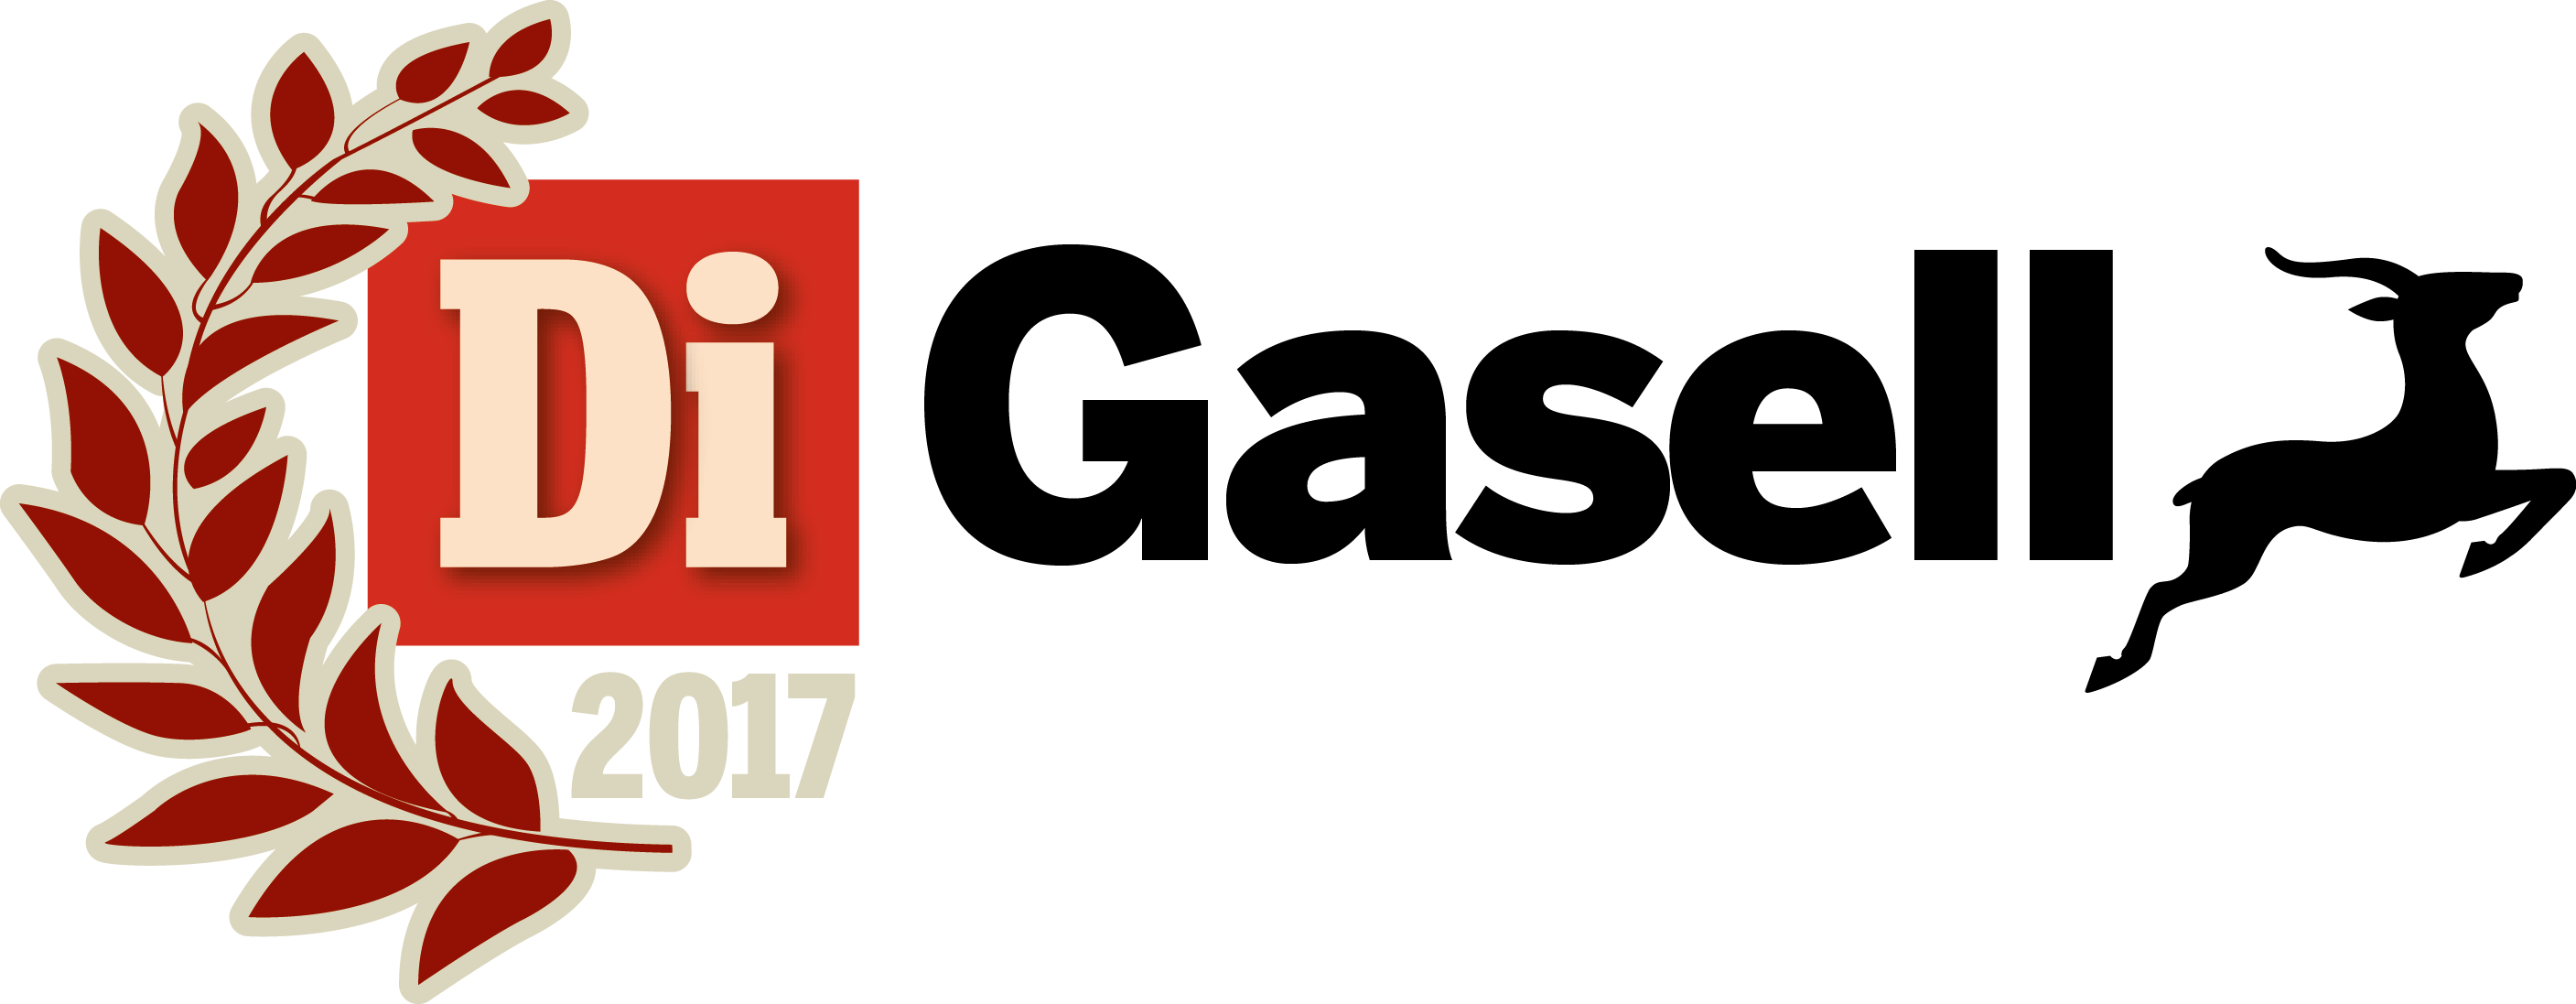 Gasellvinnare 2017 logotyp